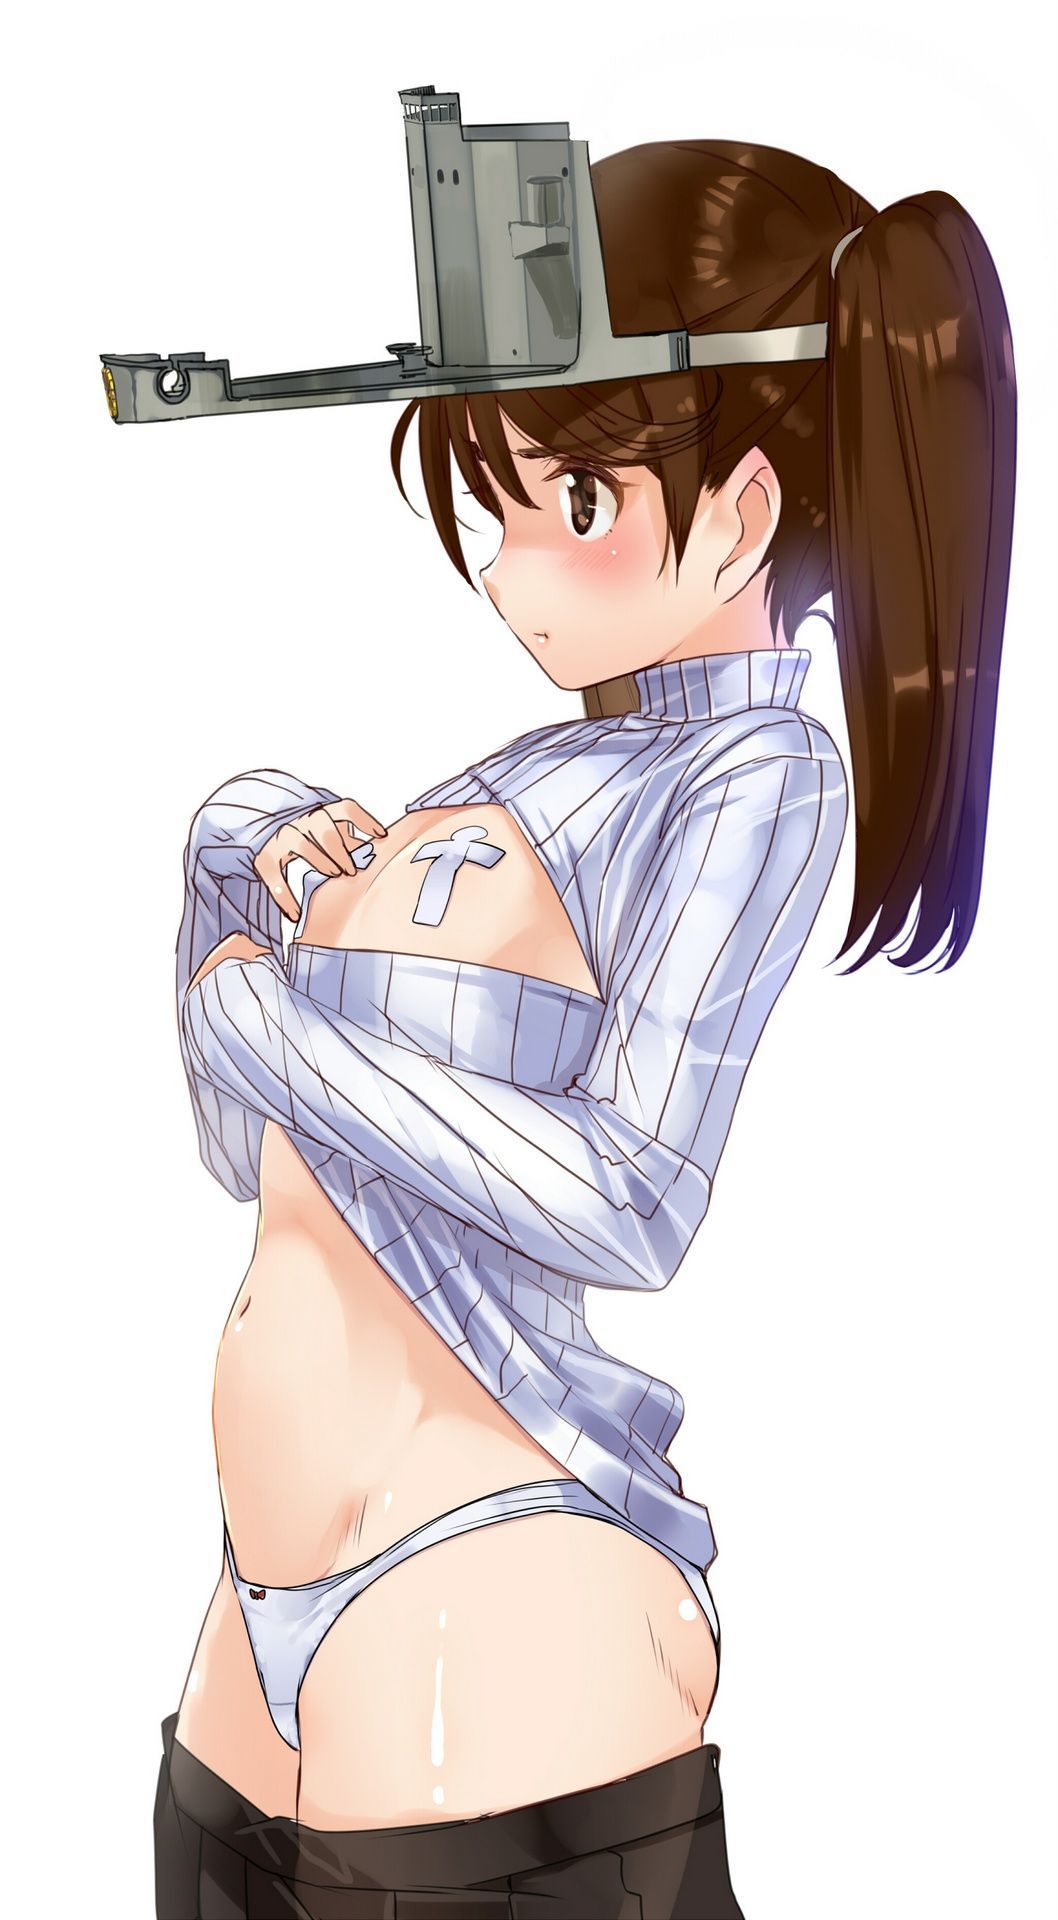 【Fleet Kokushon】 Let's paste erotic kawaii images of Ryuho together for free ☆ 17